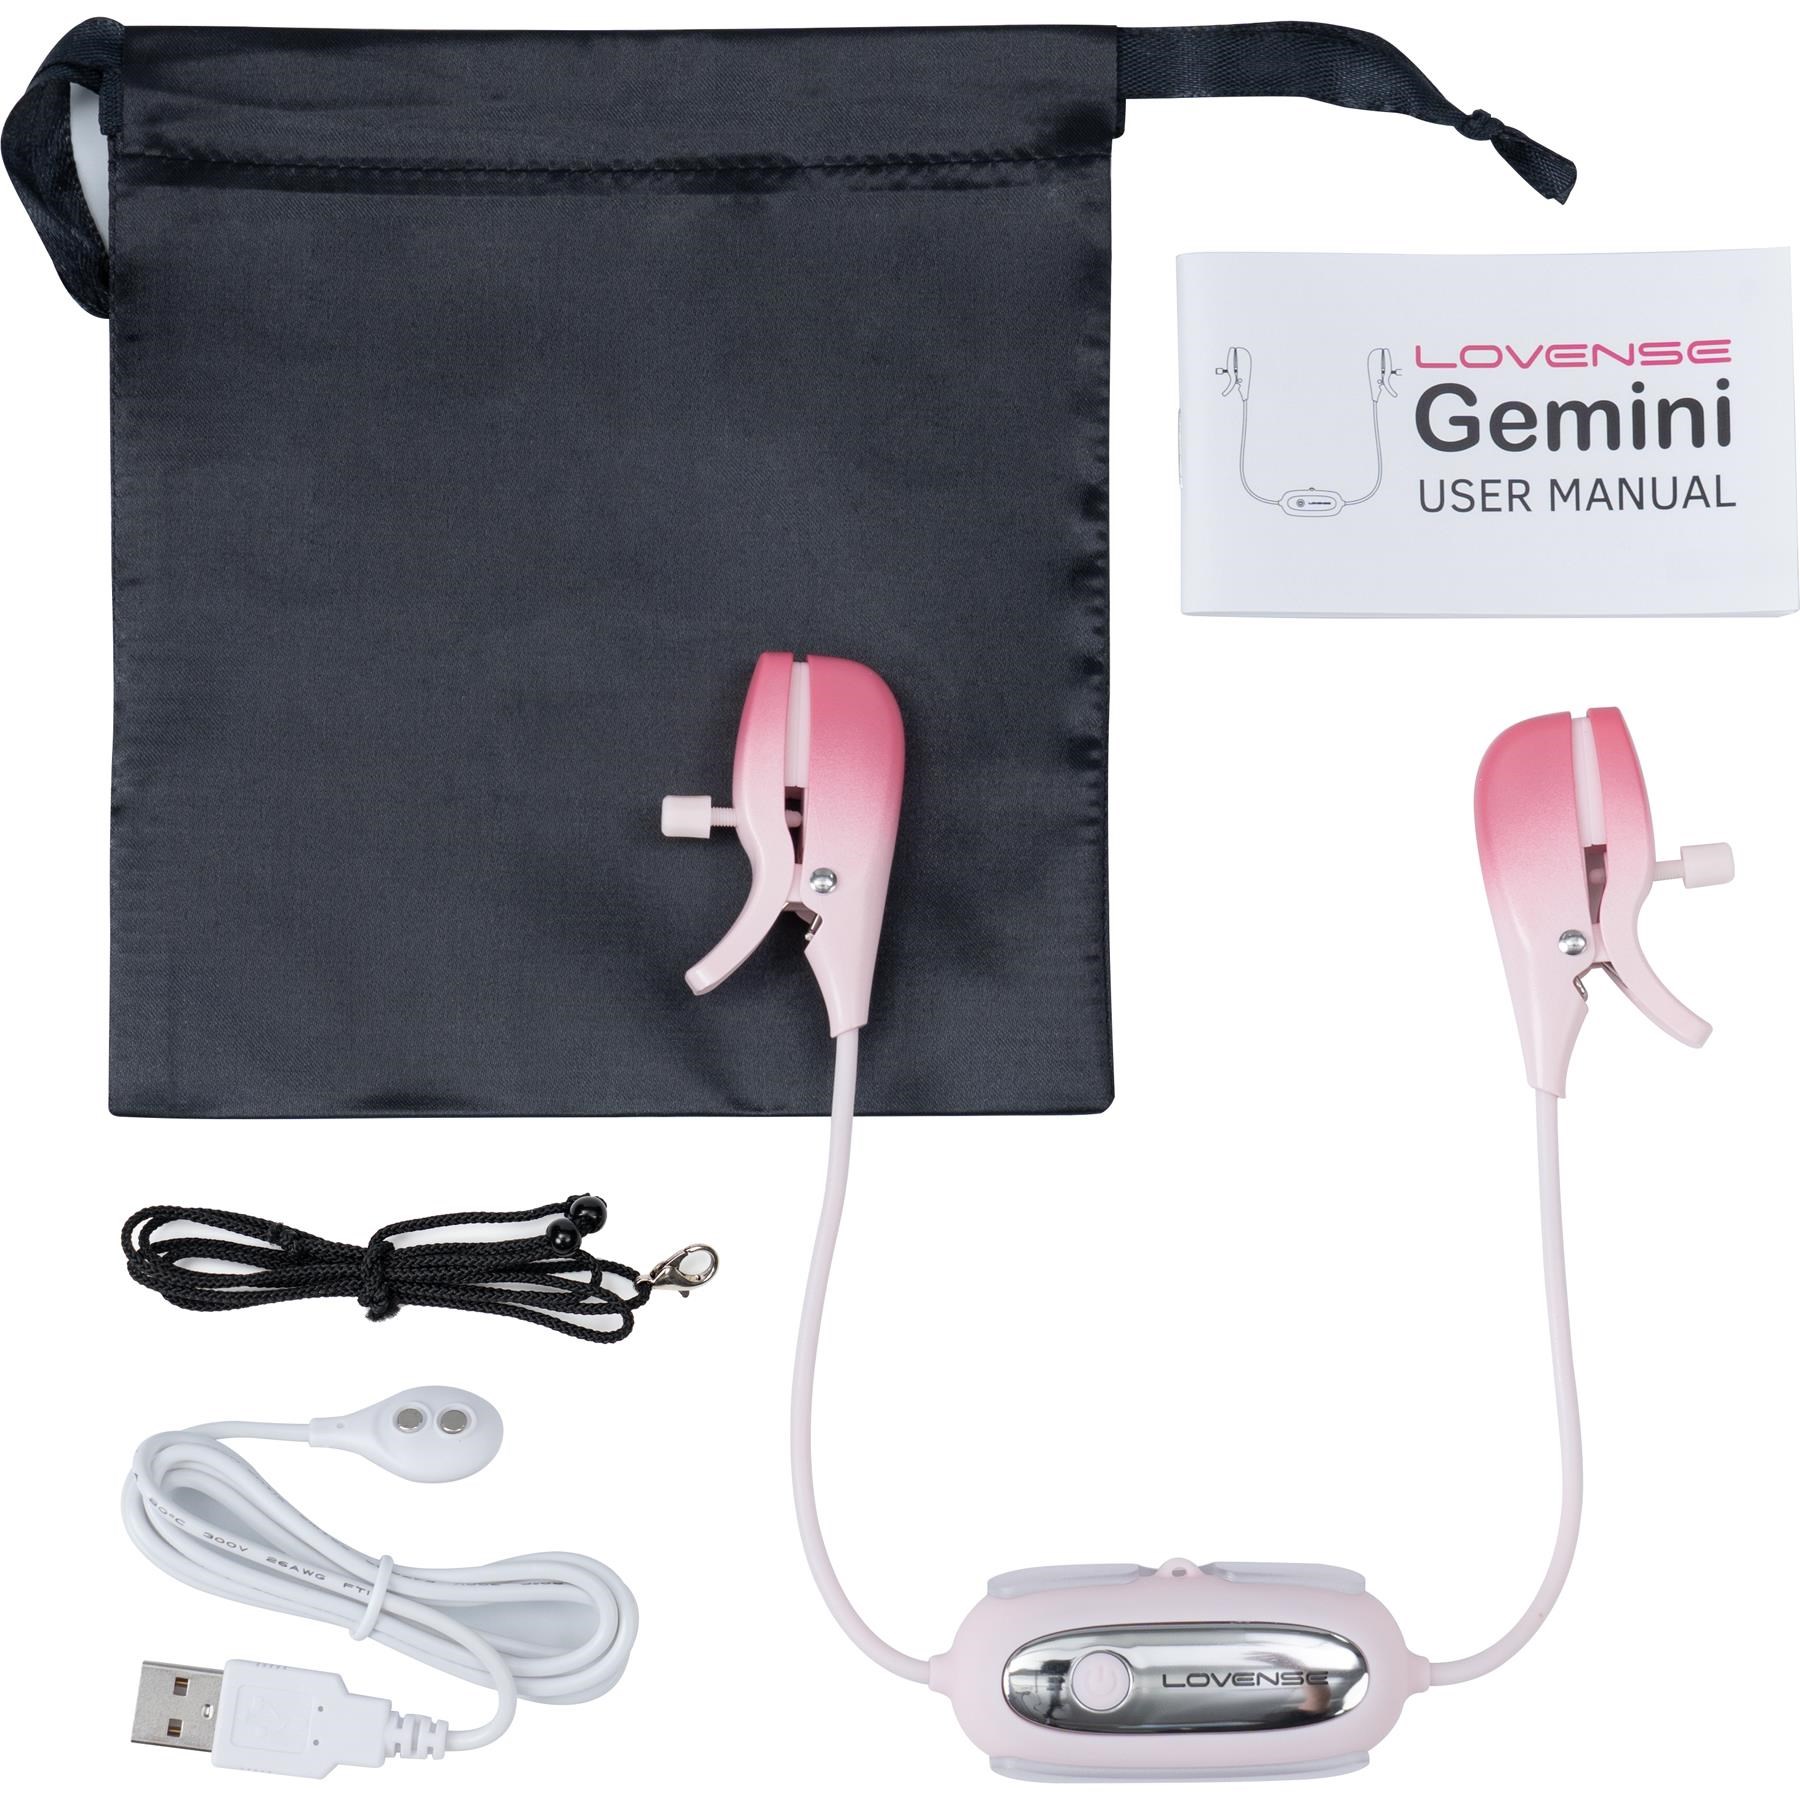 Lovense Gemini Bluetooth Vibrating Nipple Stimulators - All components